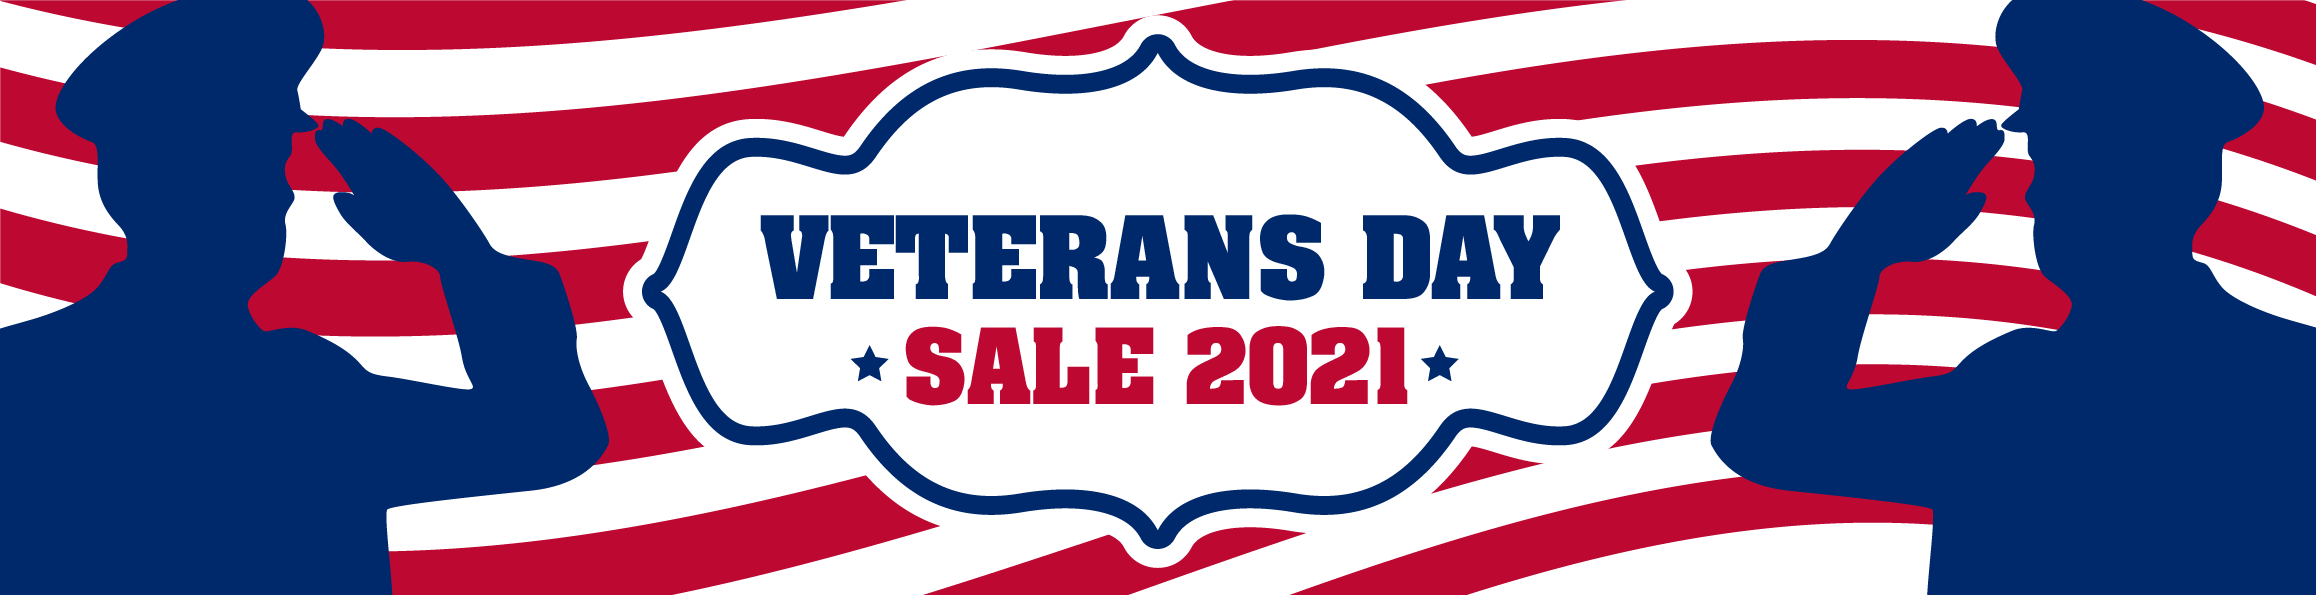 Veterans Day Sales 2021